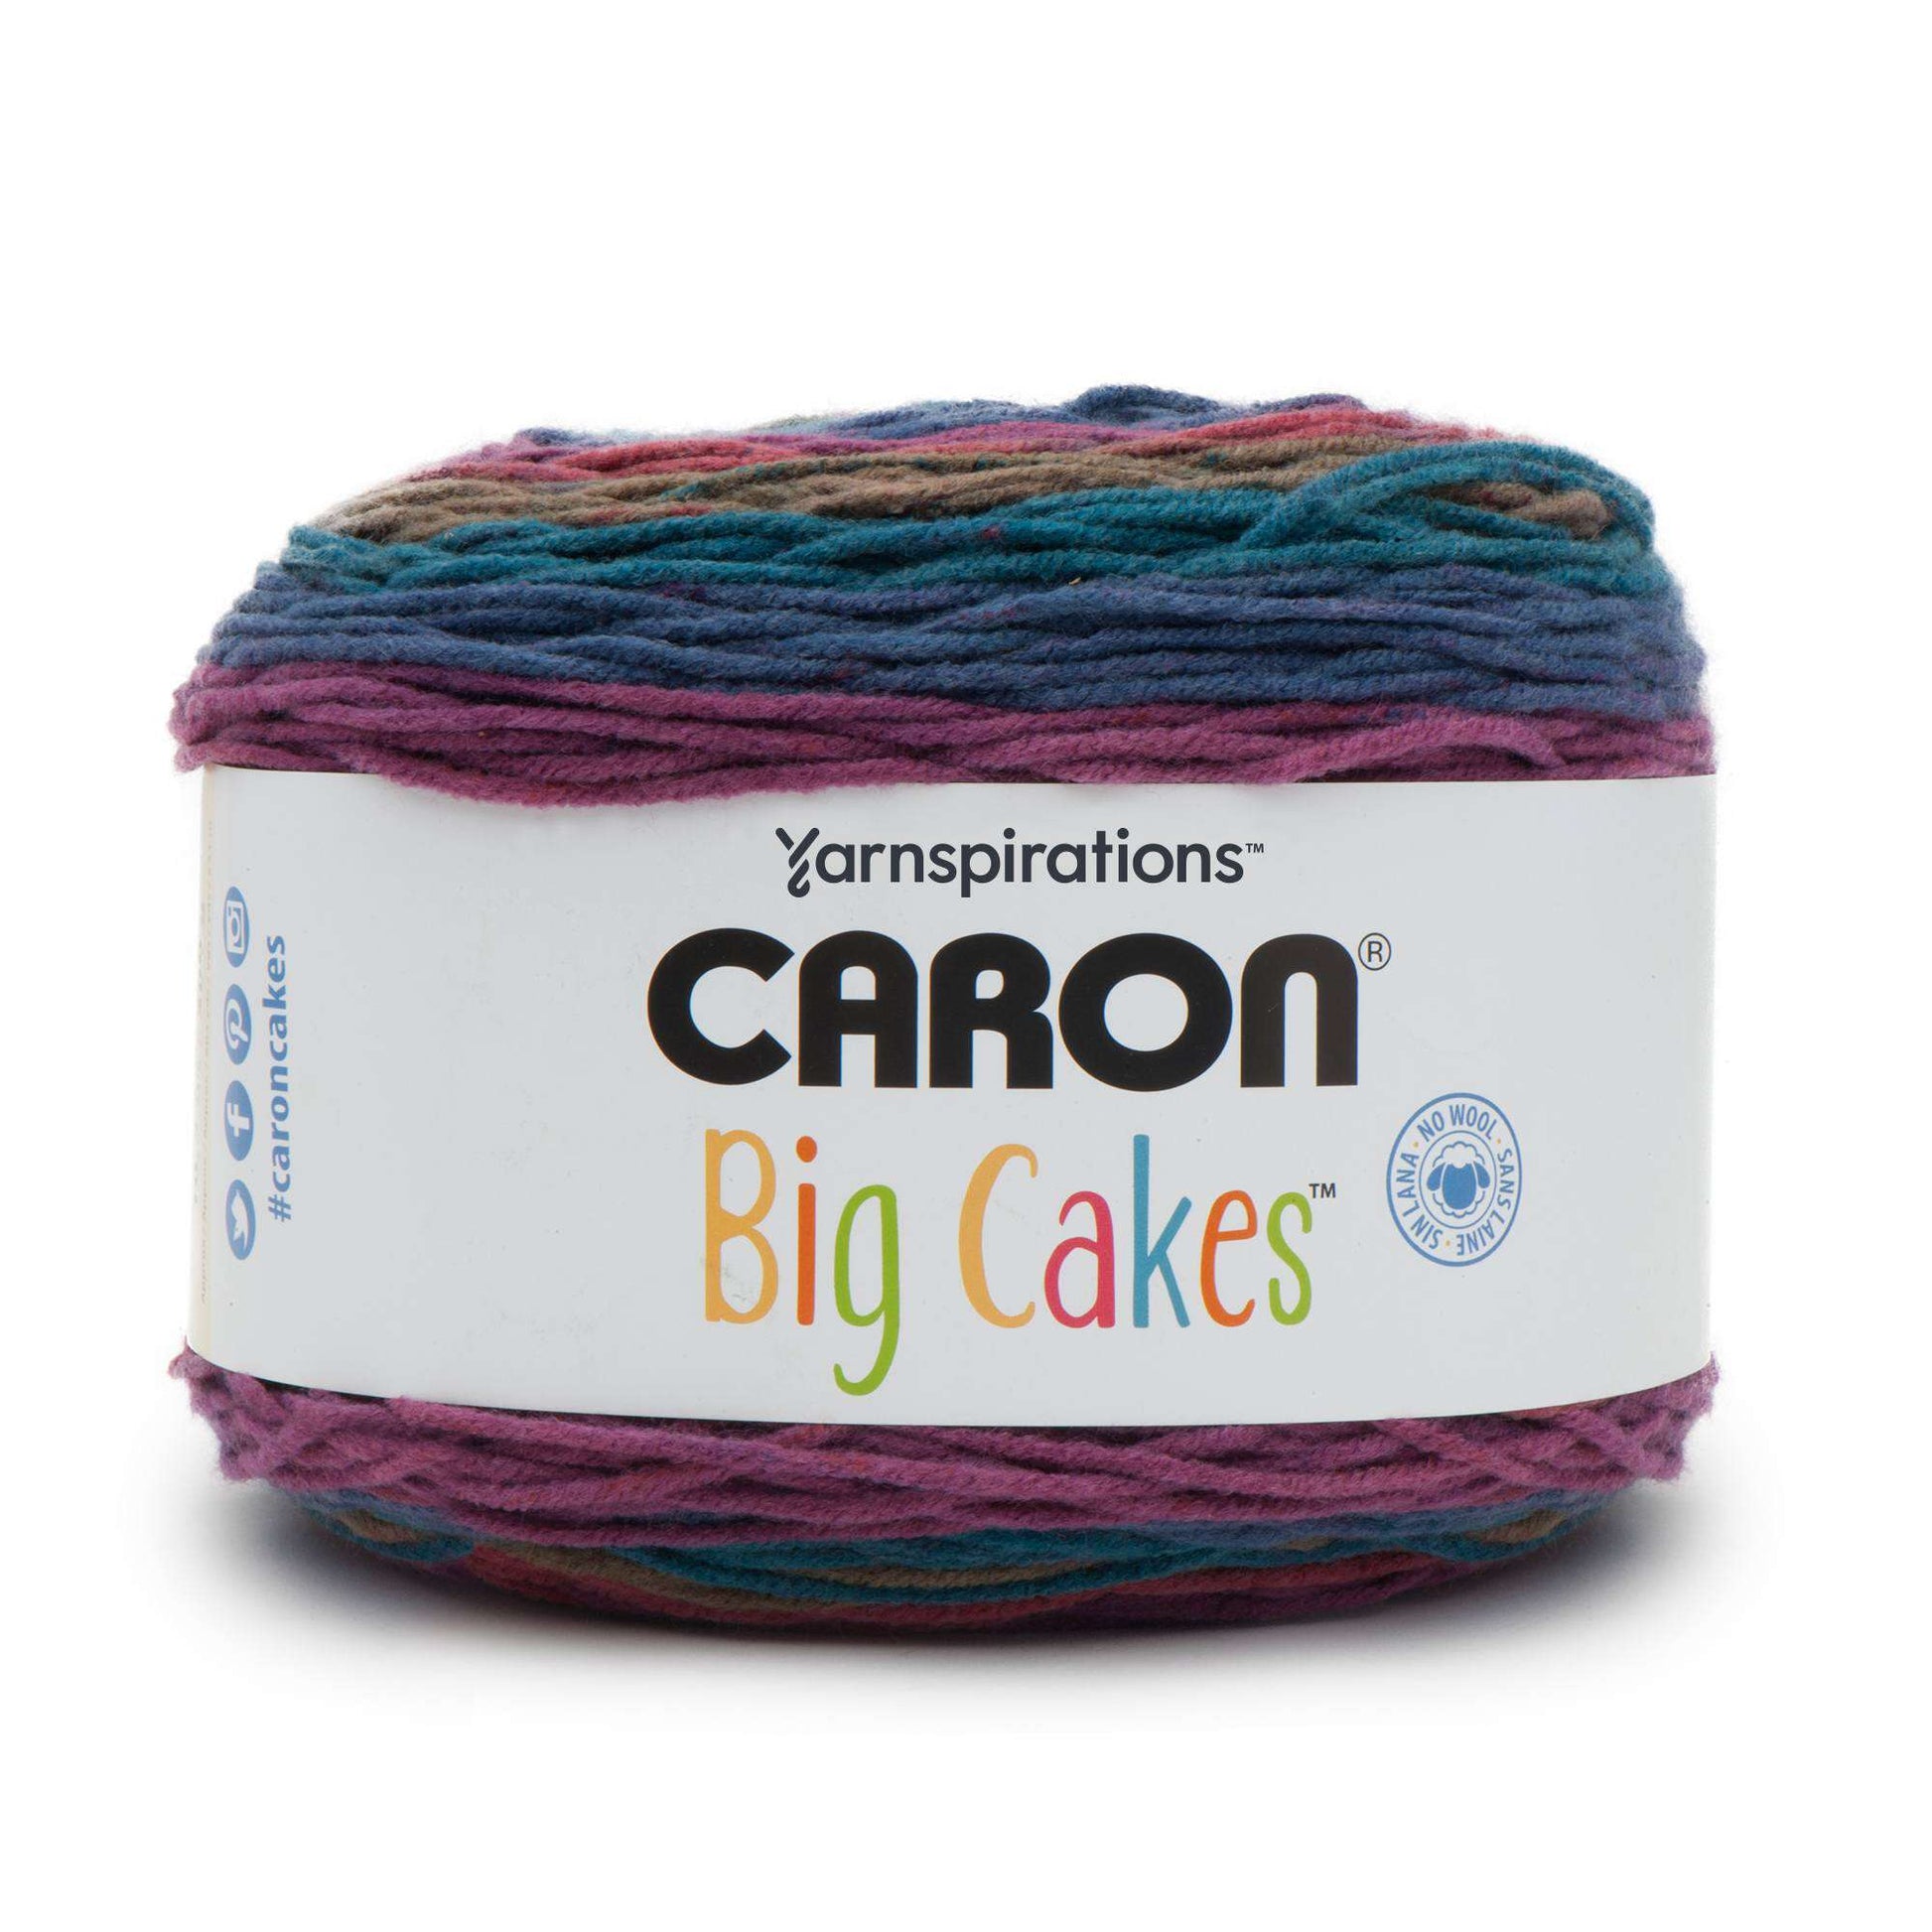 Caron Big Cakes Self Striping Yarn ~ 603 Yd/551 M/10.5Oz/300 G Each (Cookie Crumble)